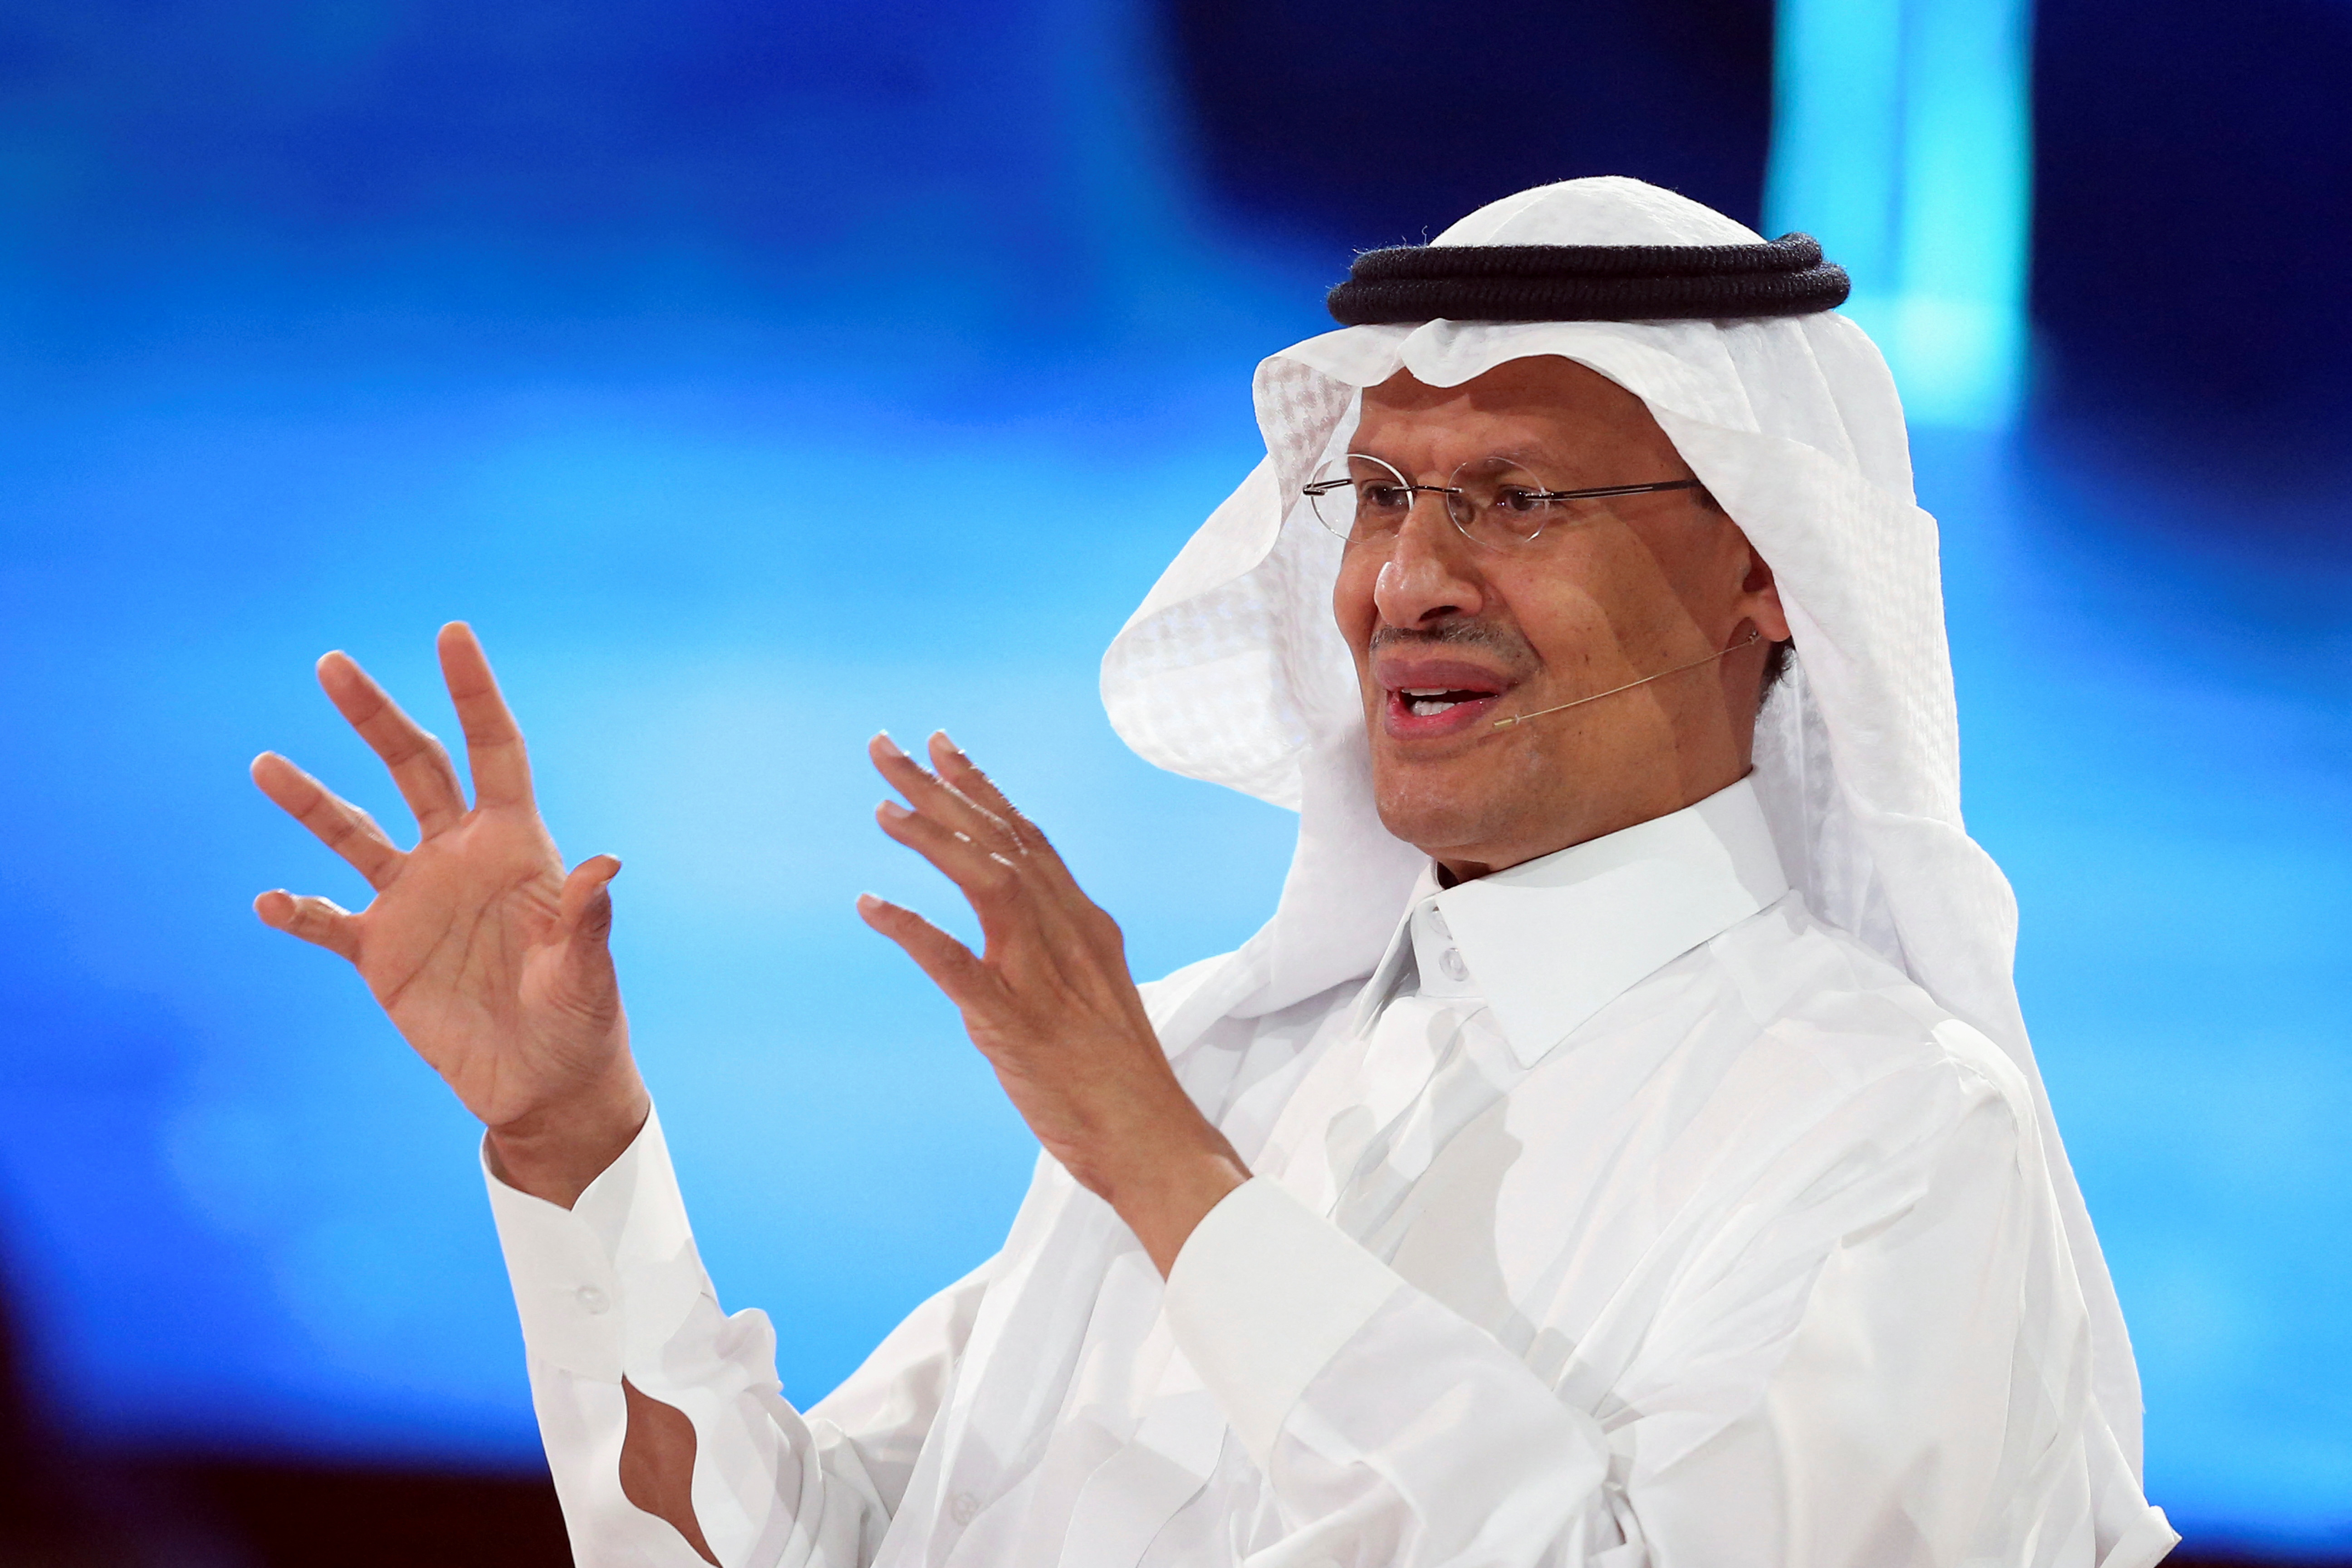 Saudi Arabia's Minister of Energy Prince Abdulaziz bin Salman Al-Saud speaks at the Future Investment Initiative conference, in Riyadh, Saudi Arabia